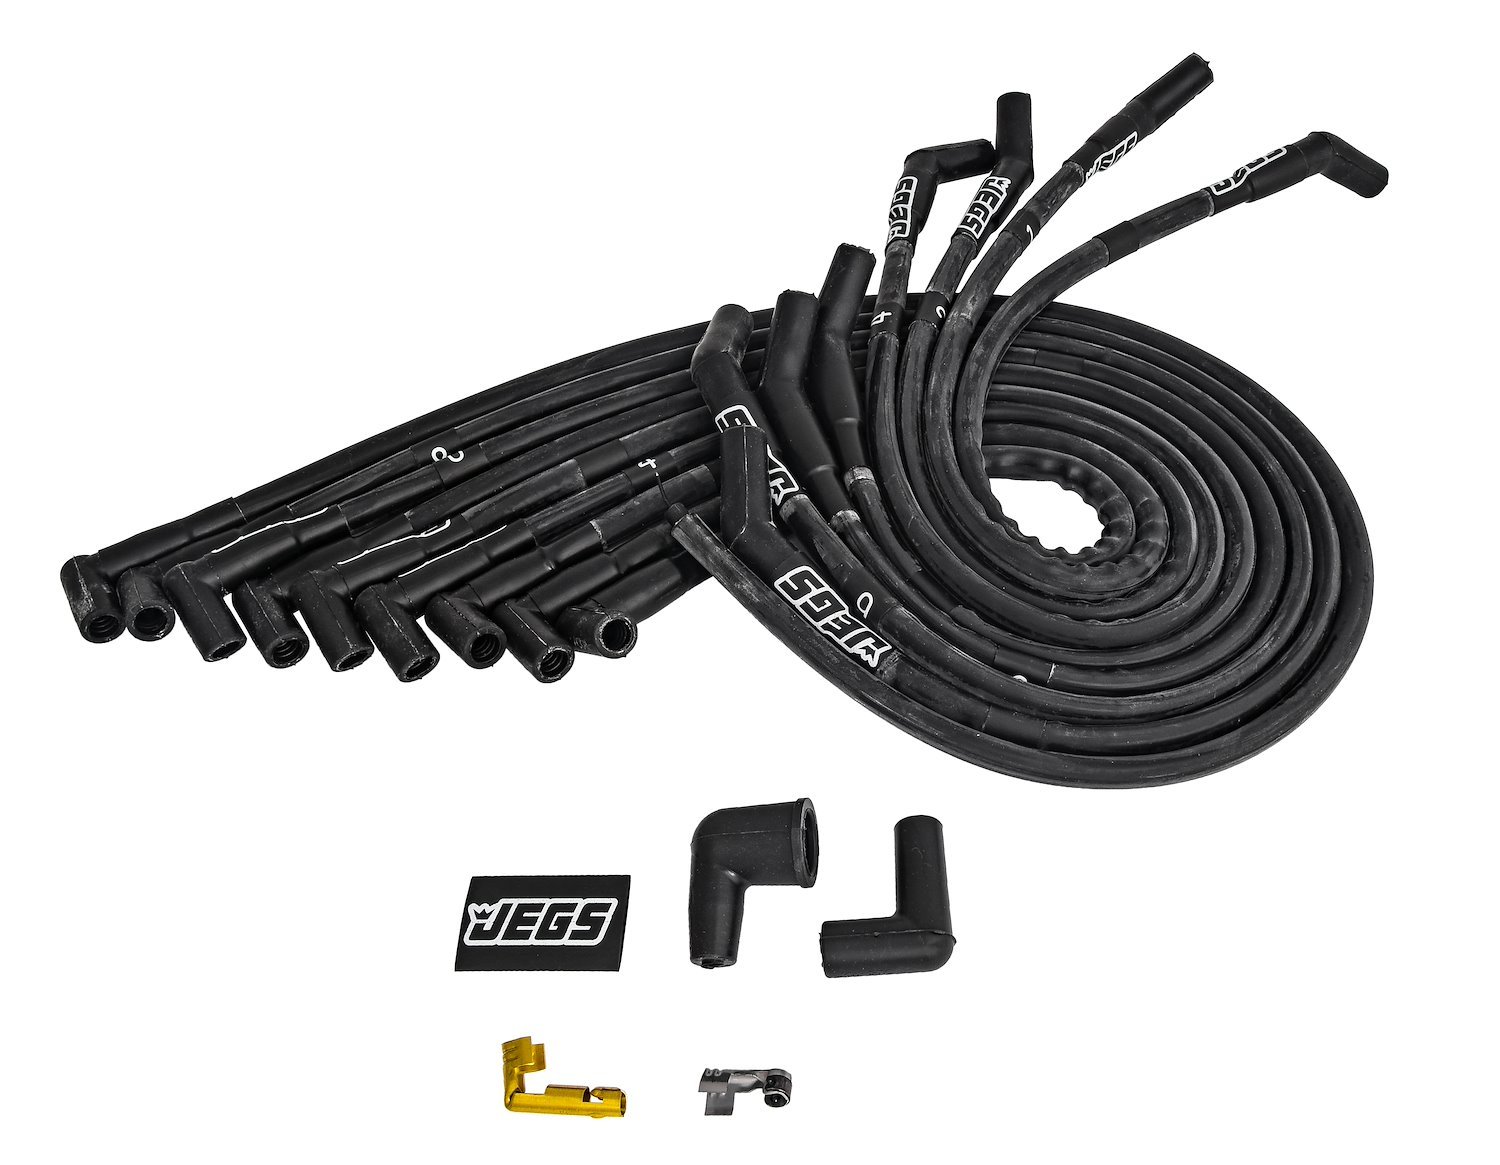 8mm Hi-Temp Sleeved Spark Plug Wire Set for Big Block Ford 429 & 460 w/HEI, Under Header w/135-degree Boots [Black]